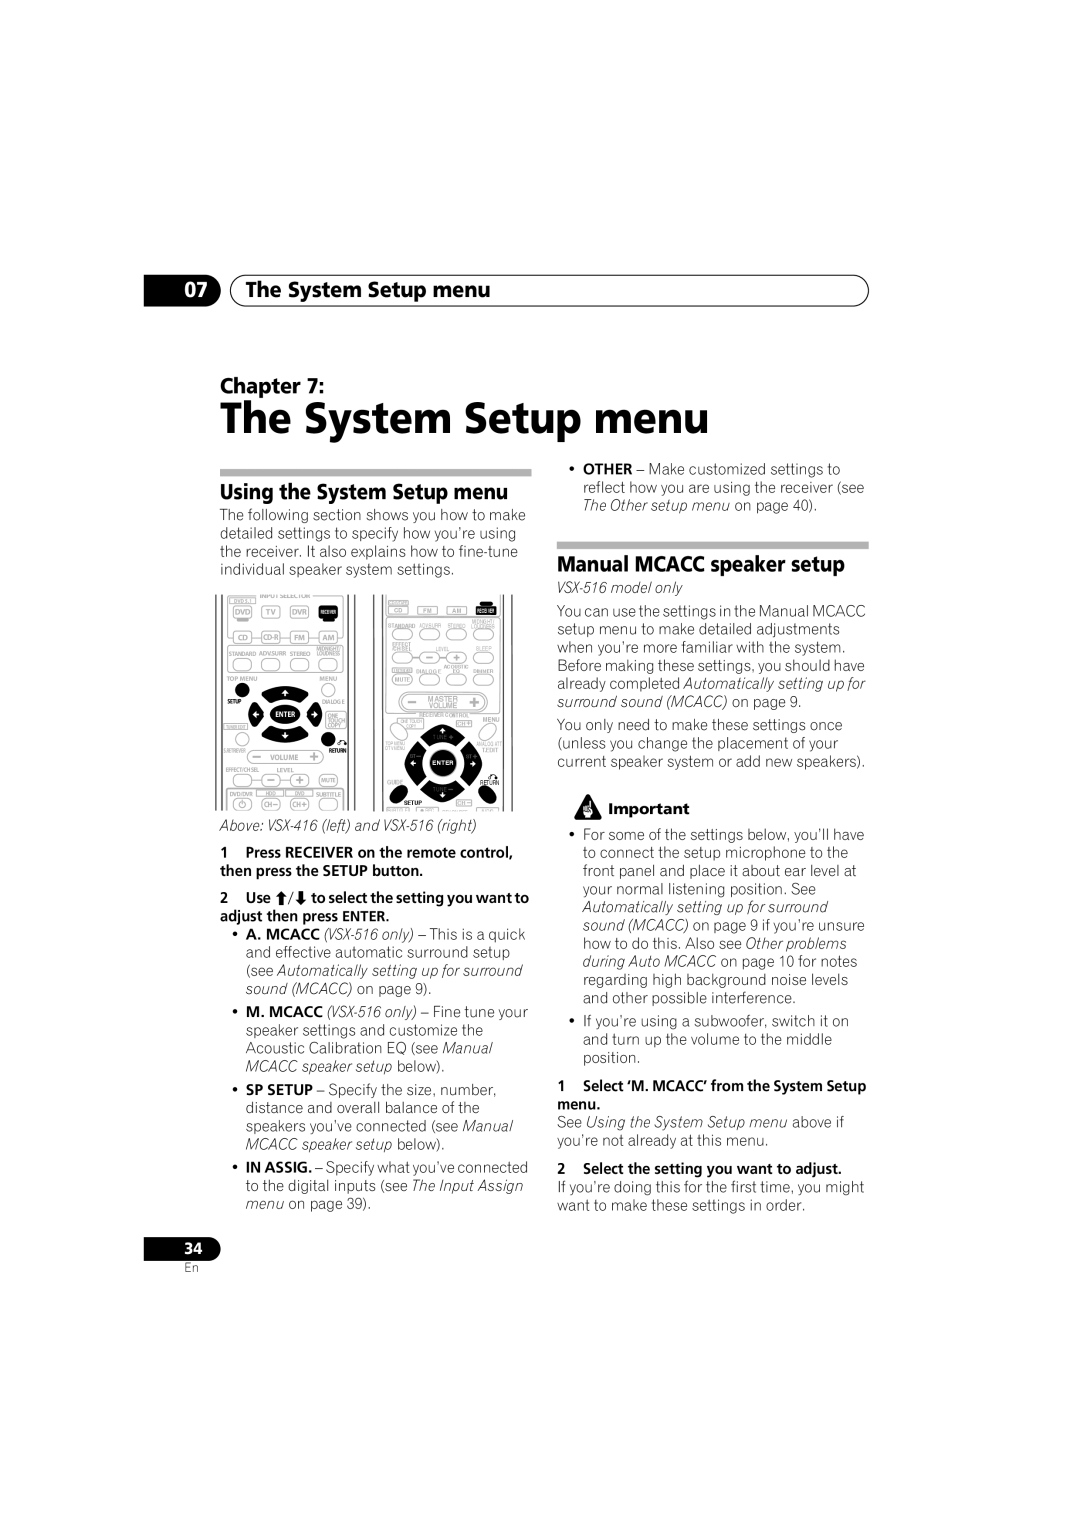 Pioneer VSX-516-S/-K 07The System Setup menu Chapter, Using the System Setup menu, Manual MCACC speaker setup 